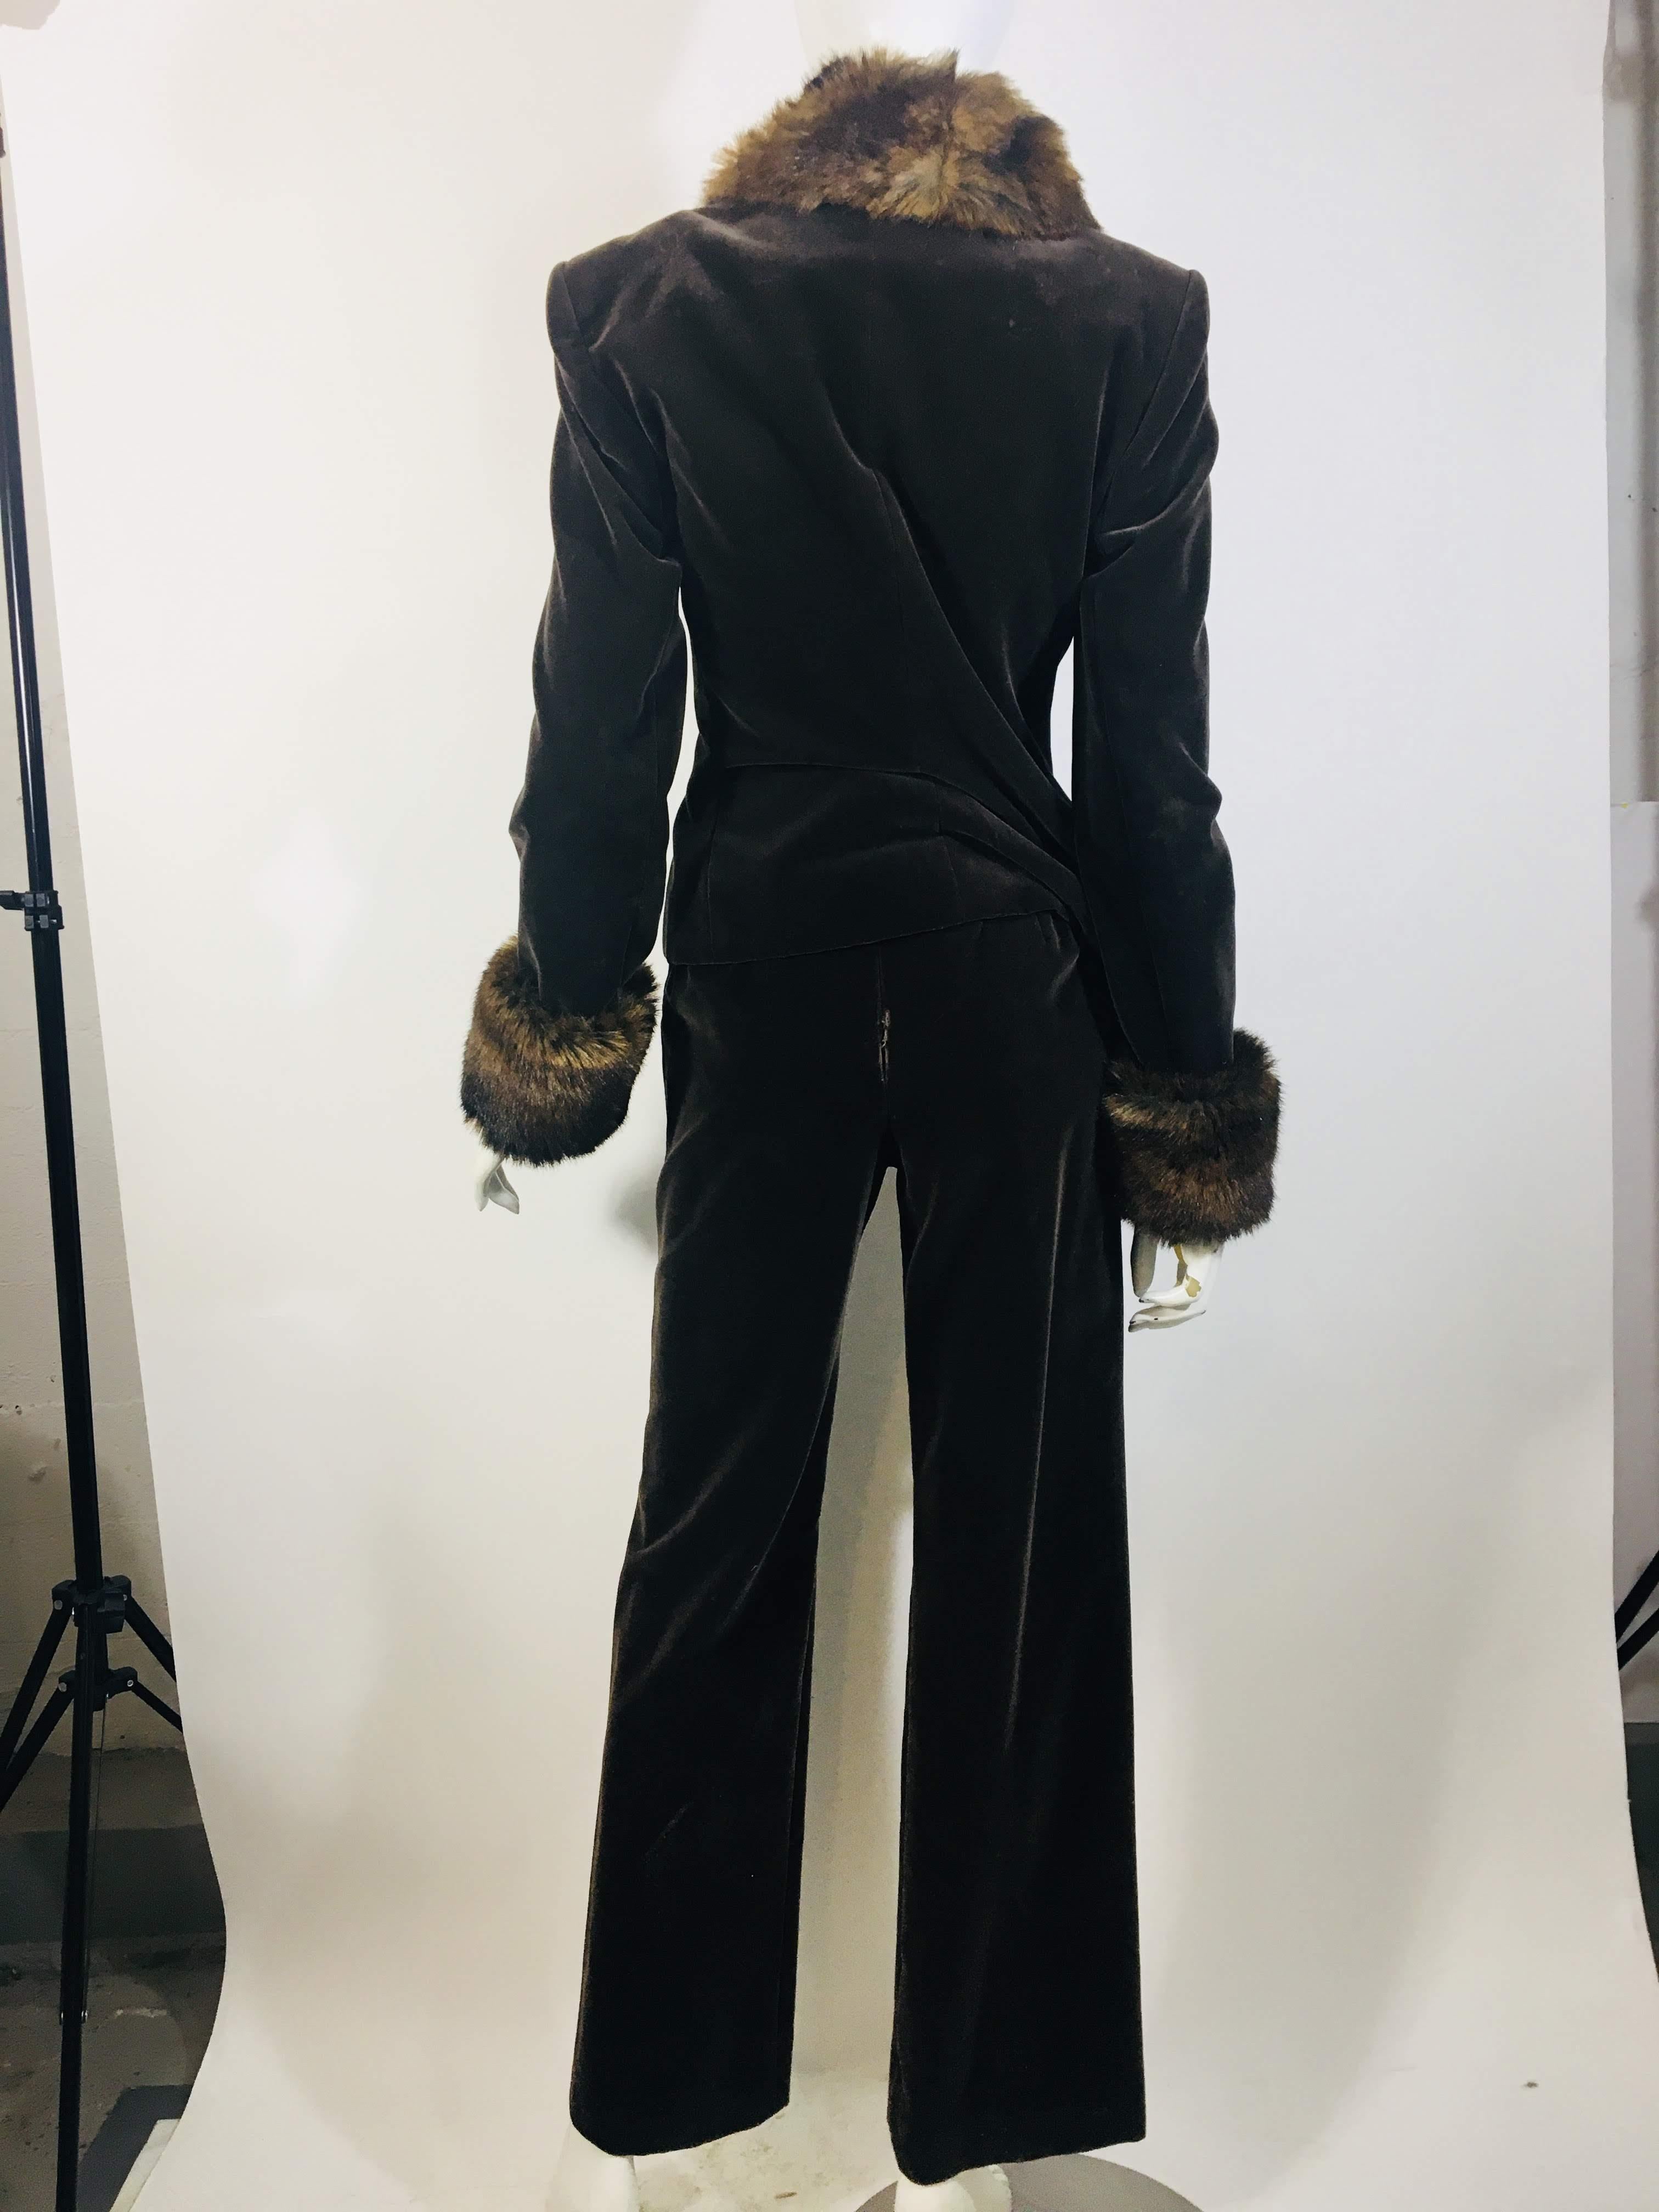 Carolina Herrera Pant Suit with Fur Trim 2